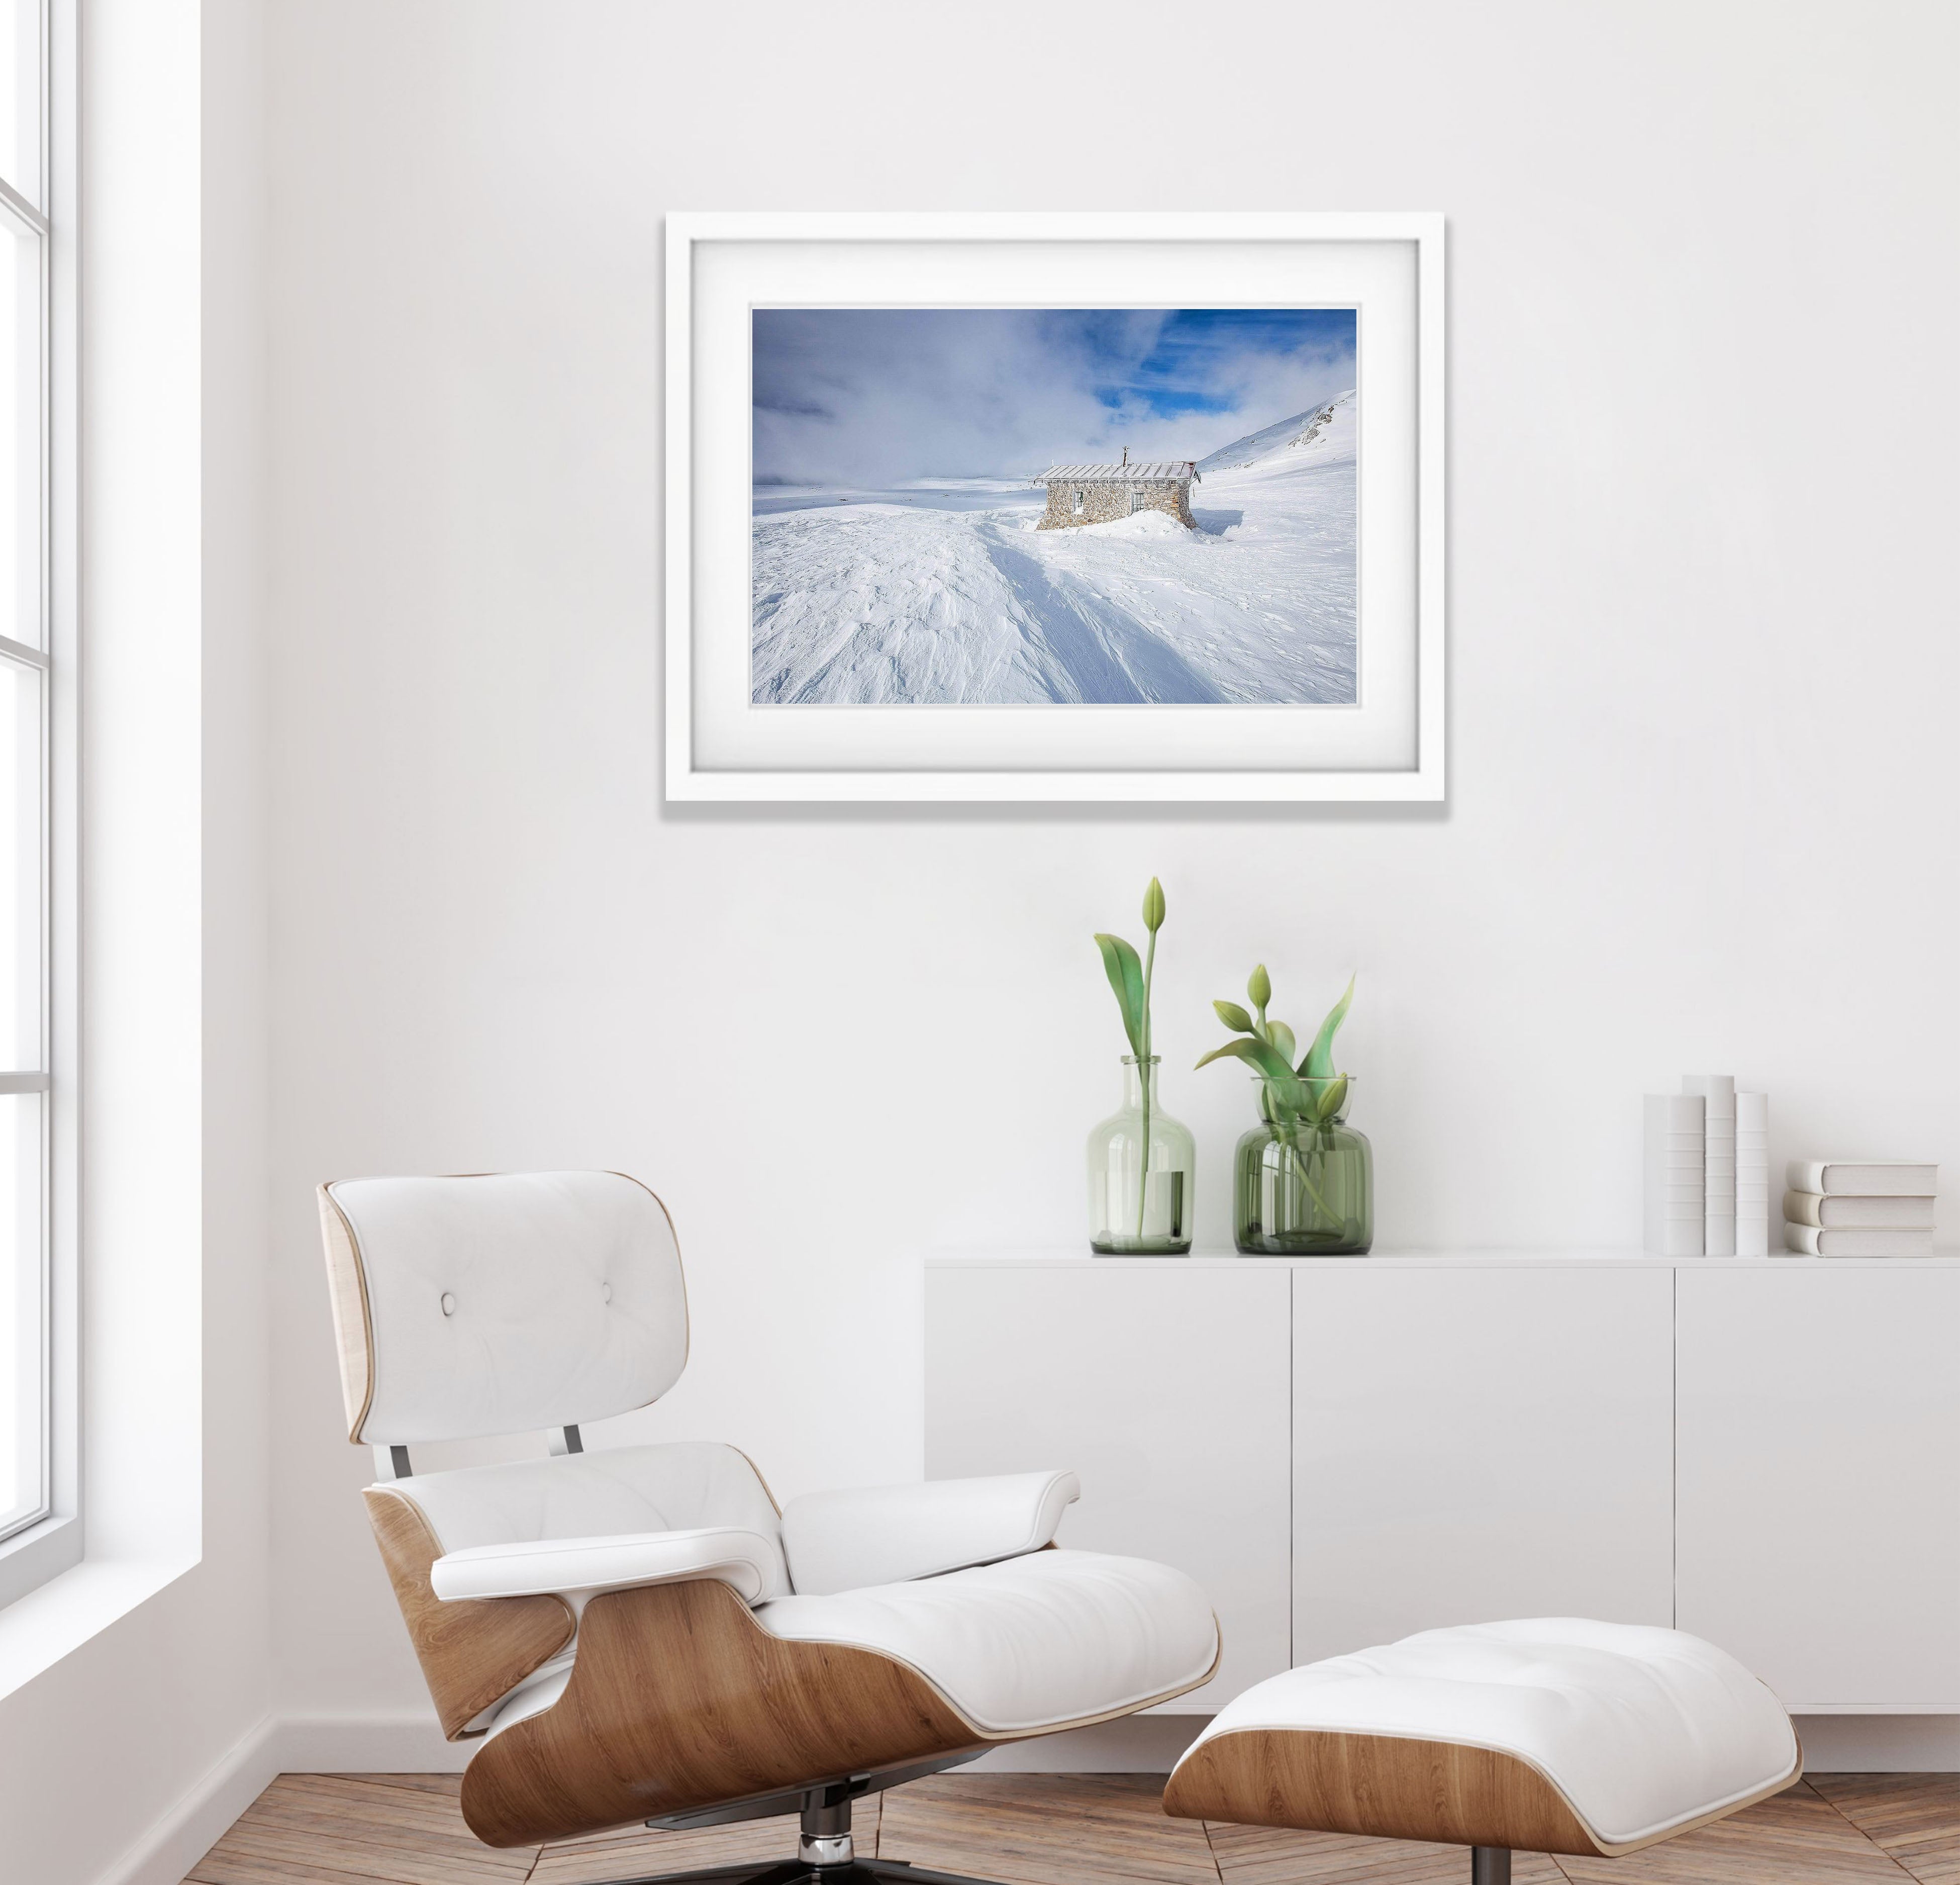 ARTWORK INSTOCK - Seaman's Hut, Snowy Mountains NSW - 100 x 66cms Raw Oak Framed Canvas Print